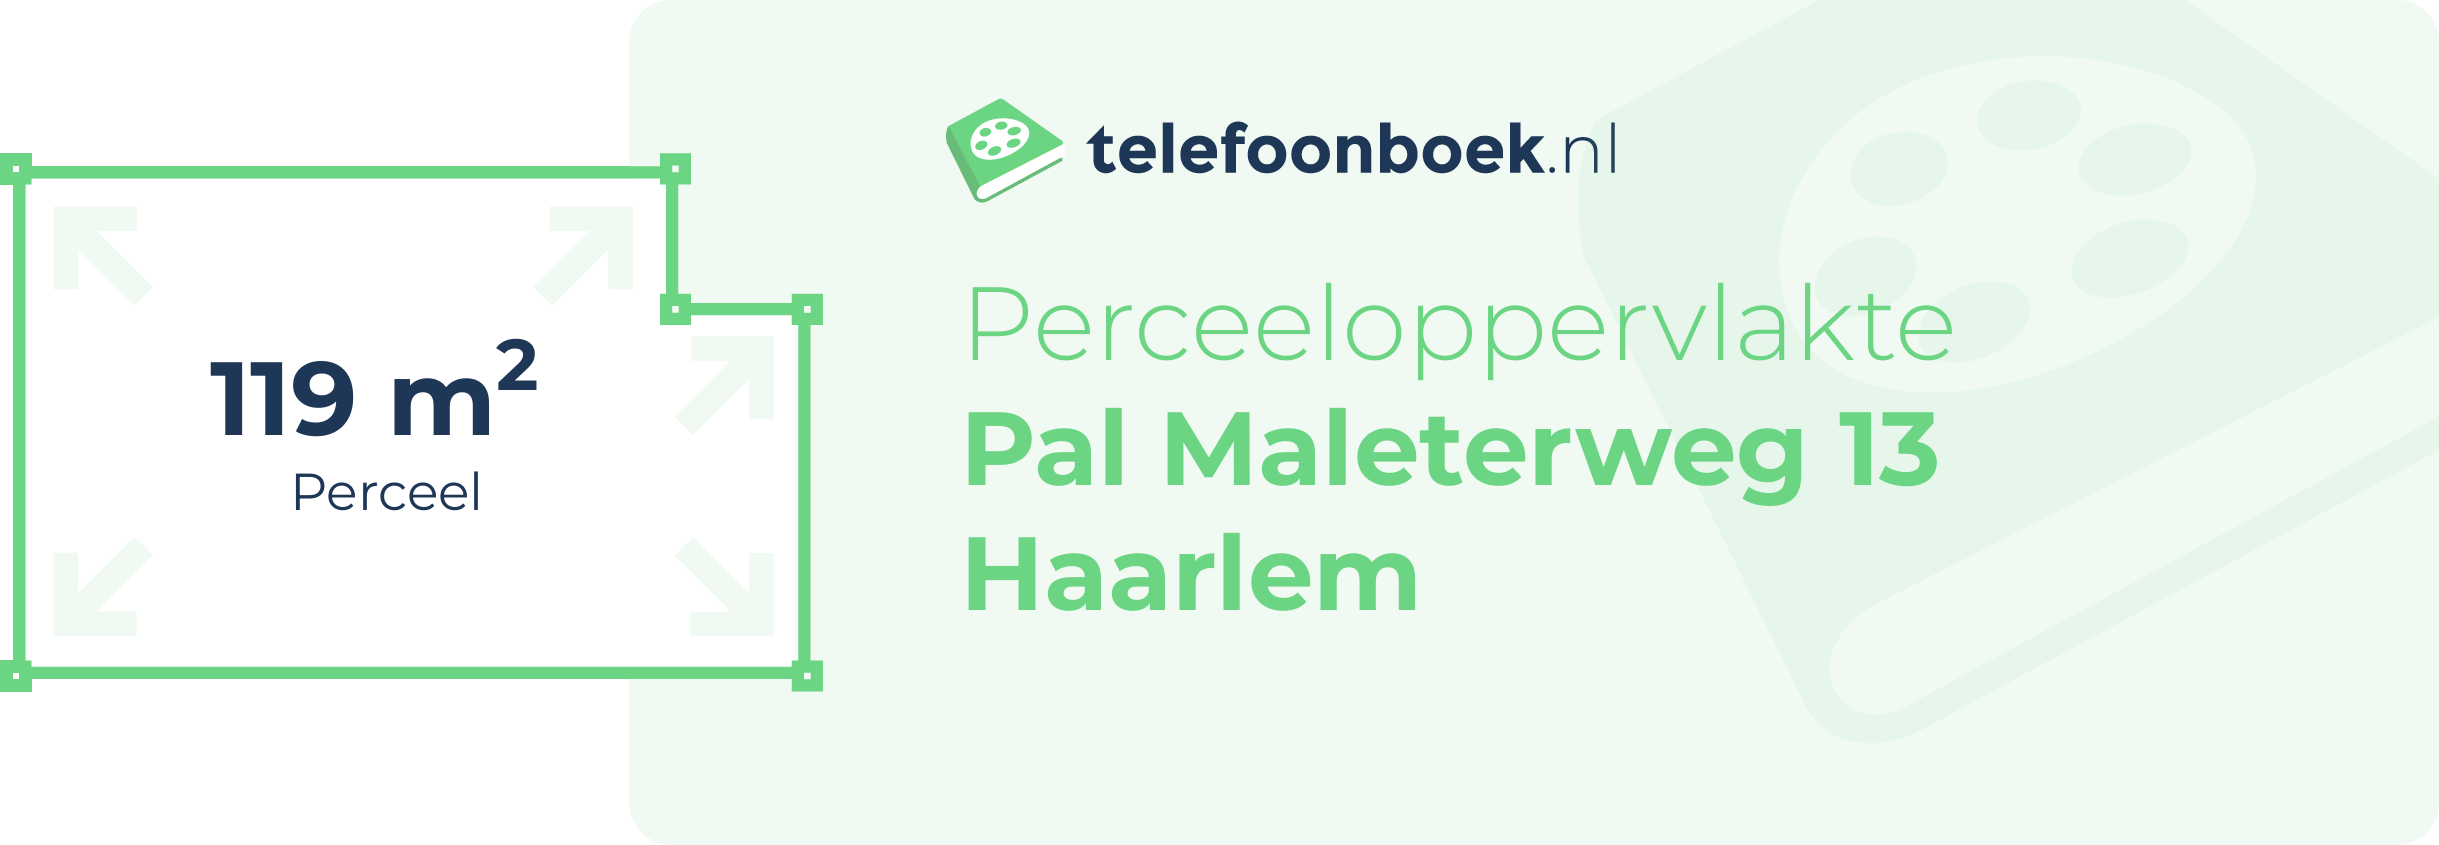 Perceeloppervlakte Pal Maleterweg 13 Haarlem